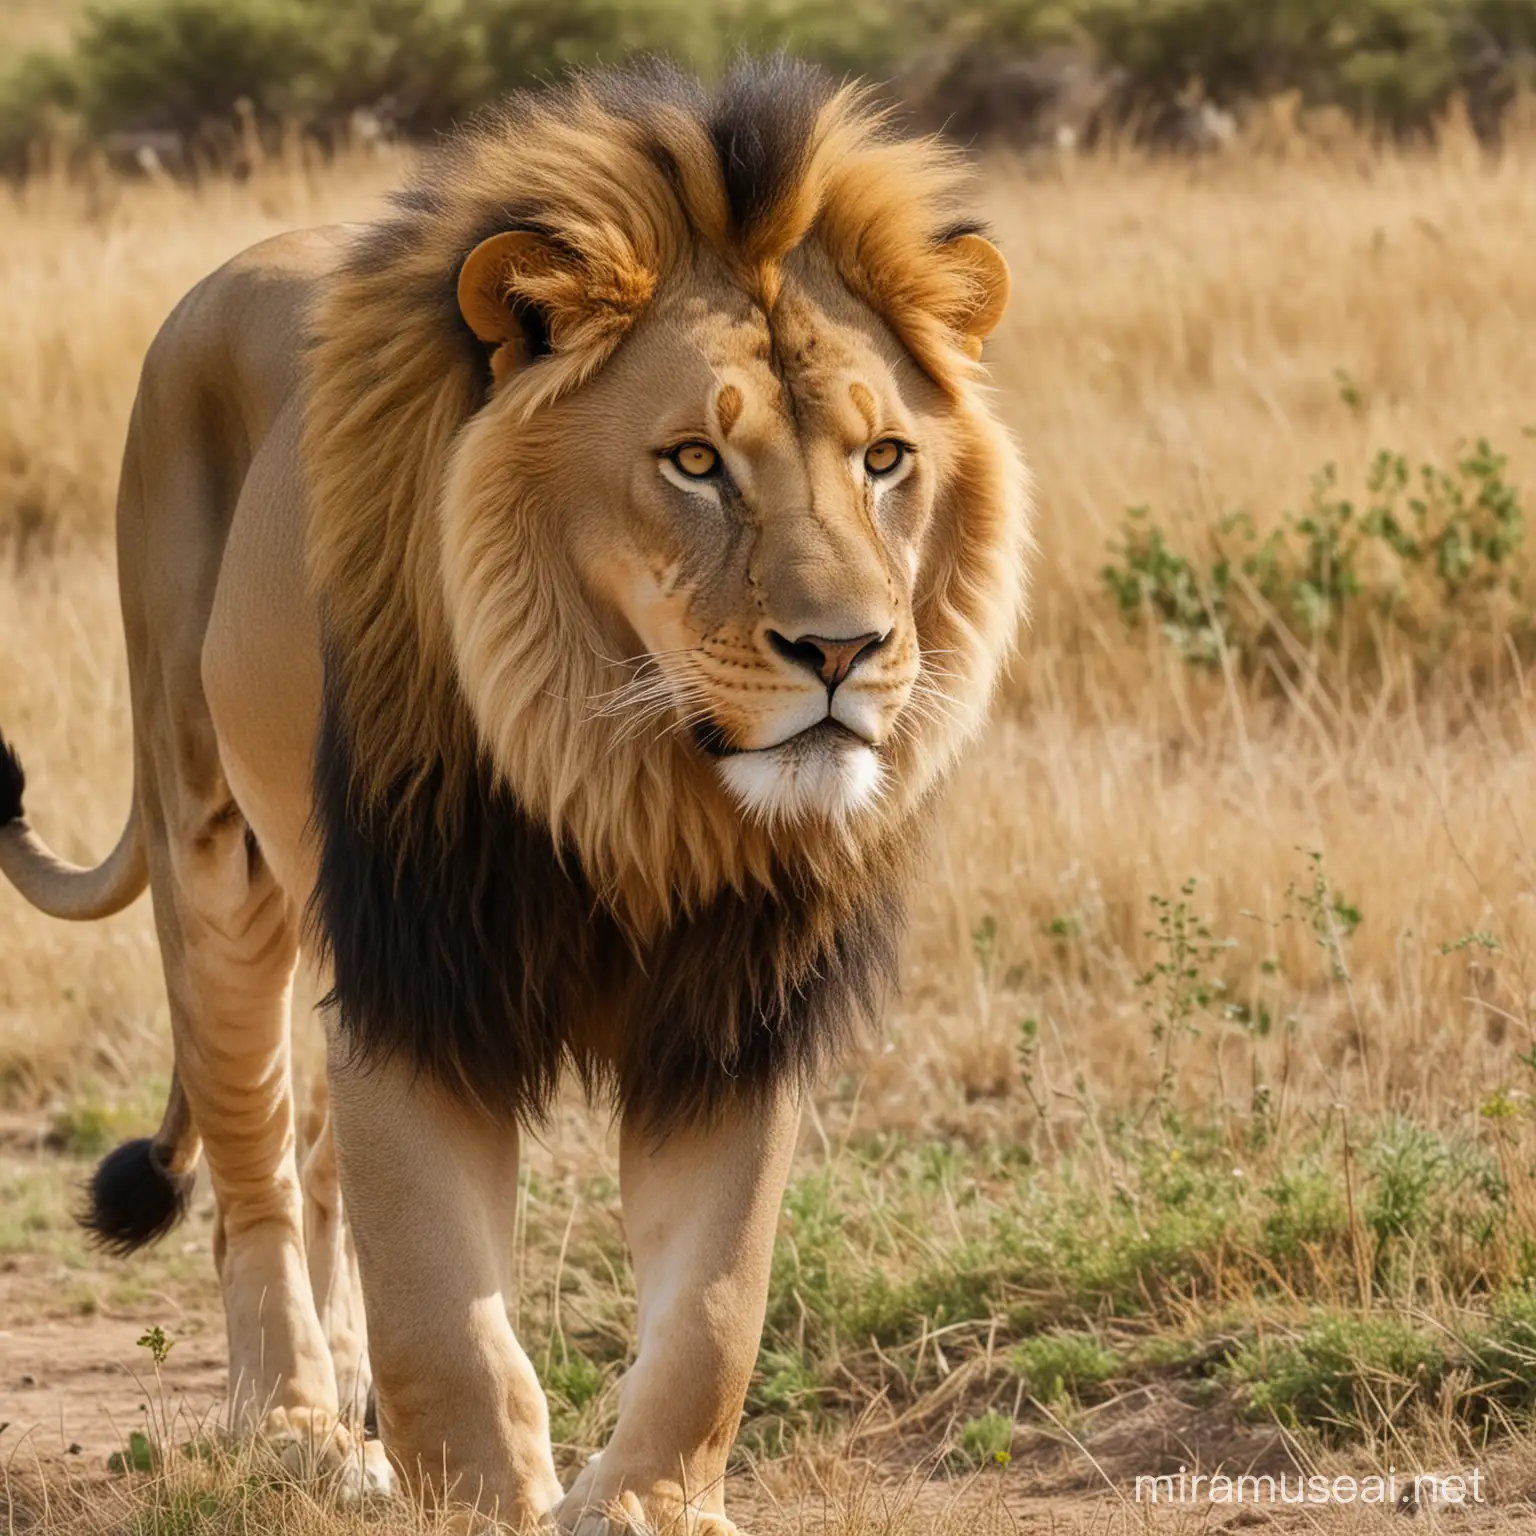 Majestic Wild Lion Roaming the Serengeti Savanna